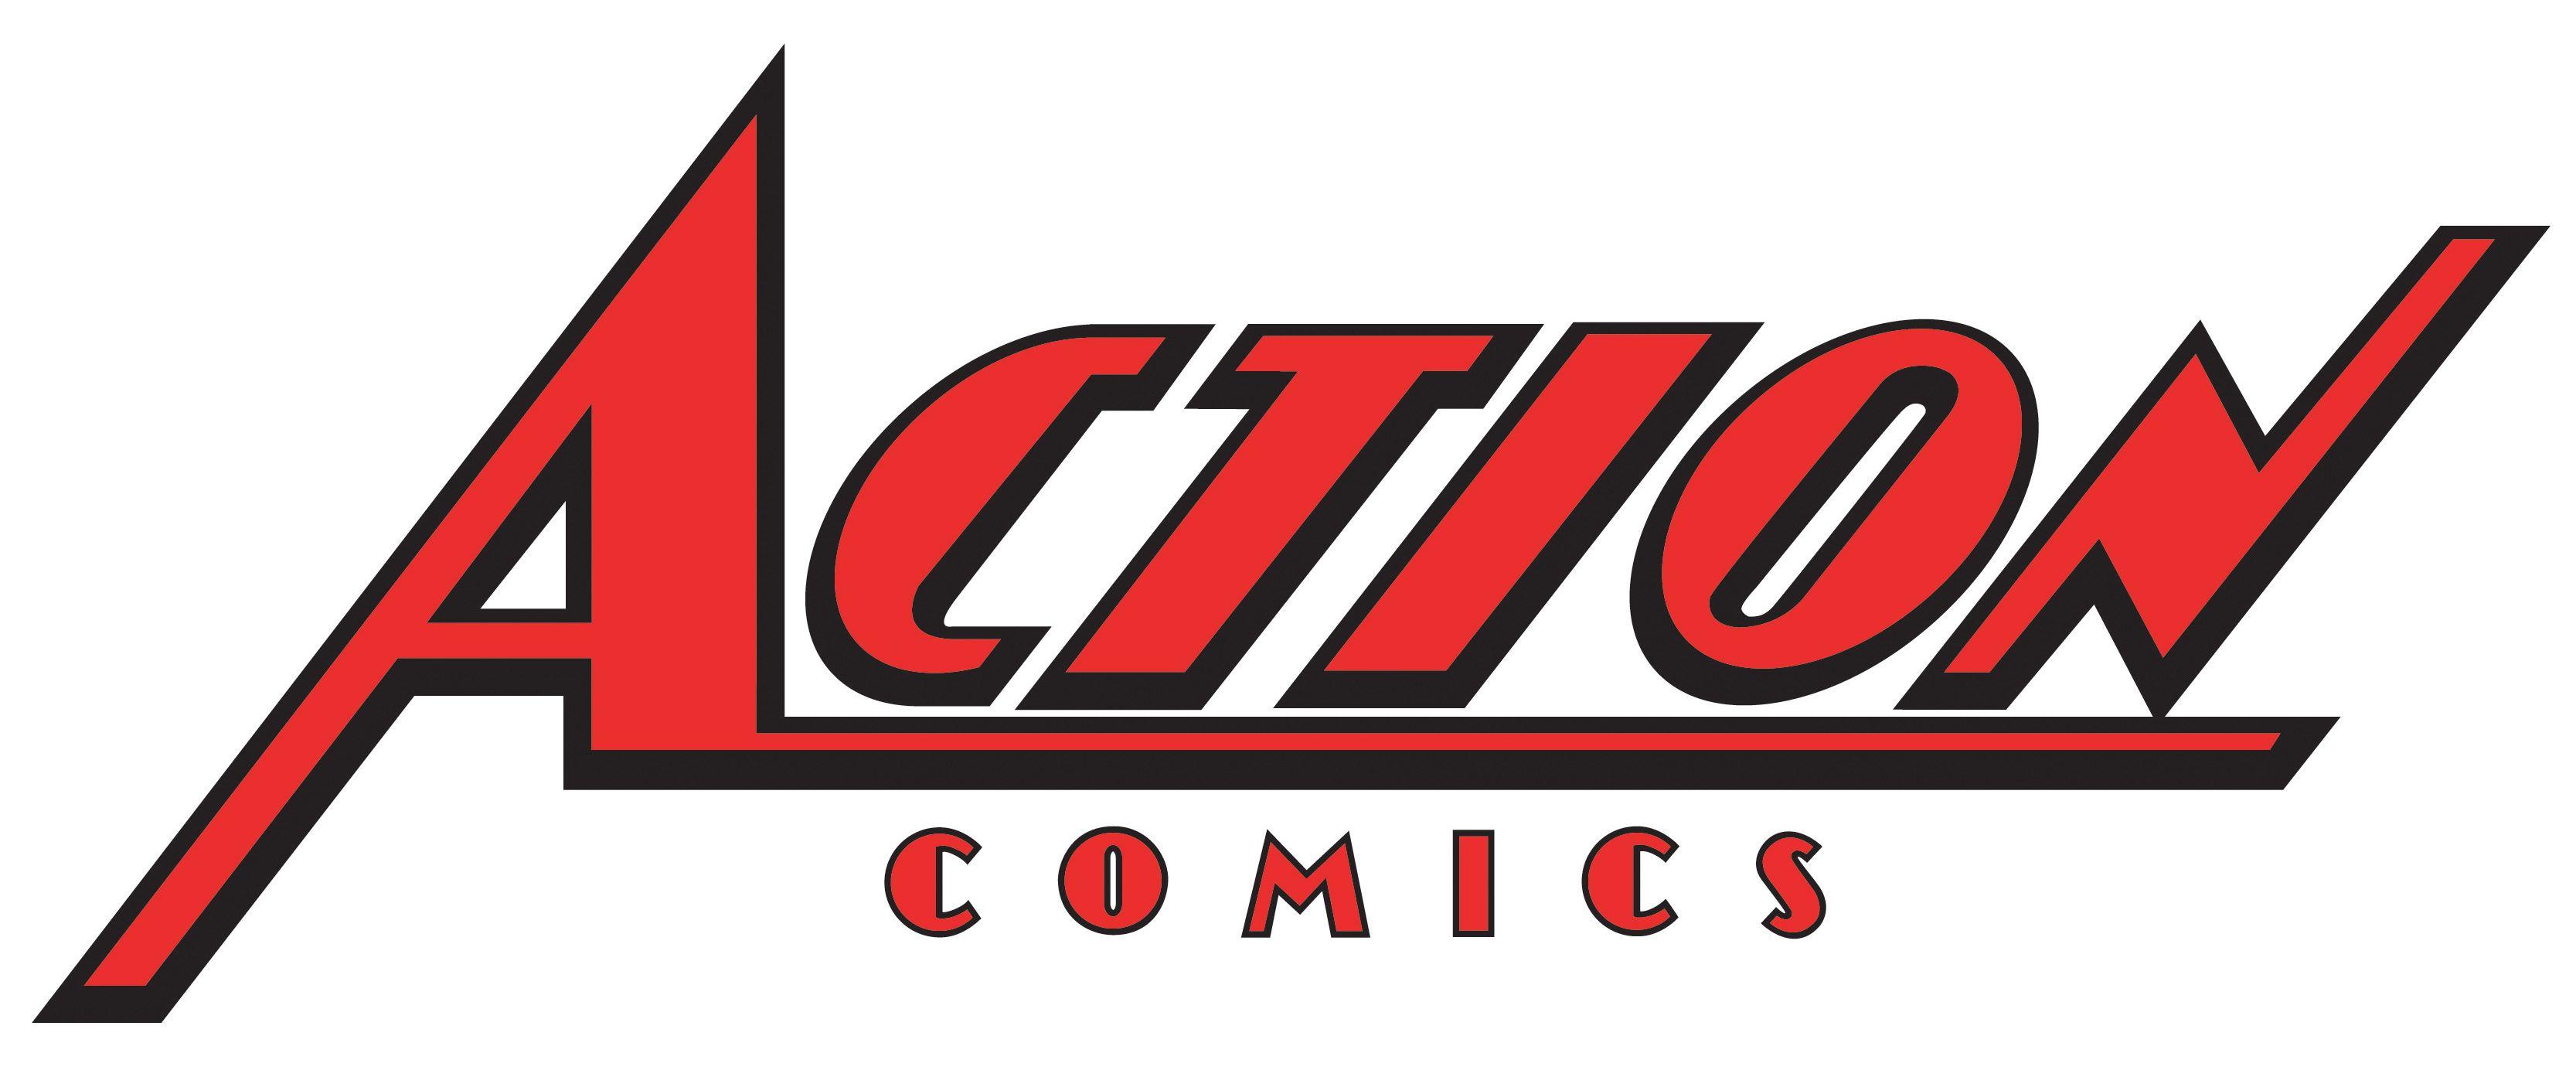 Action Logo - Action Comics by Marianoilustrado on DeviantArt